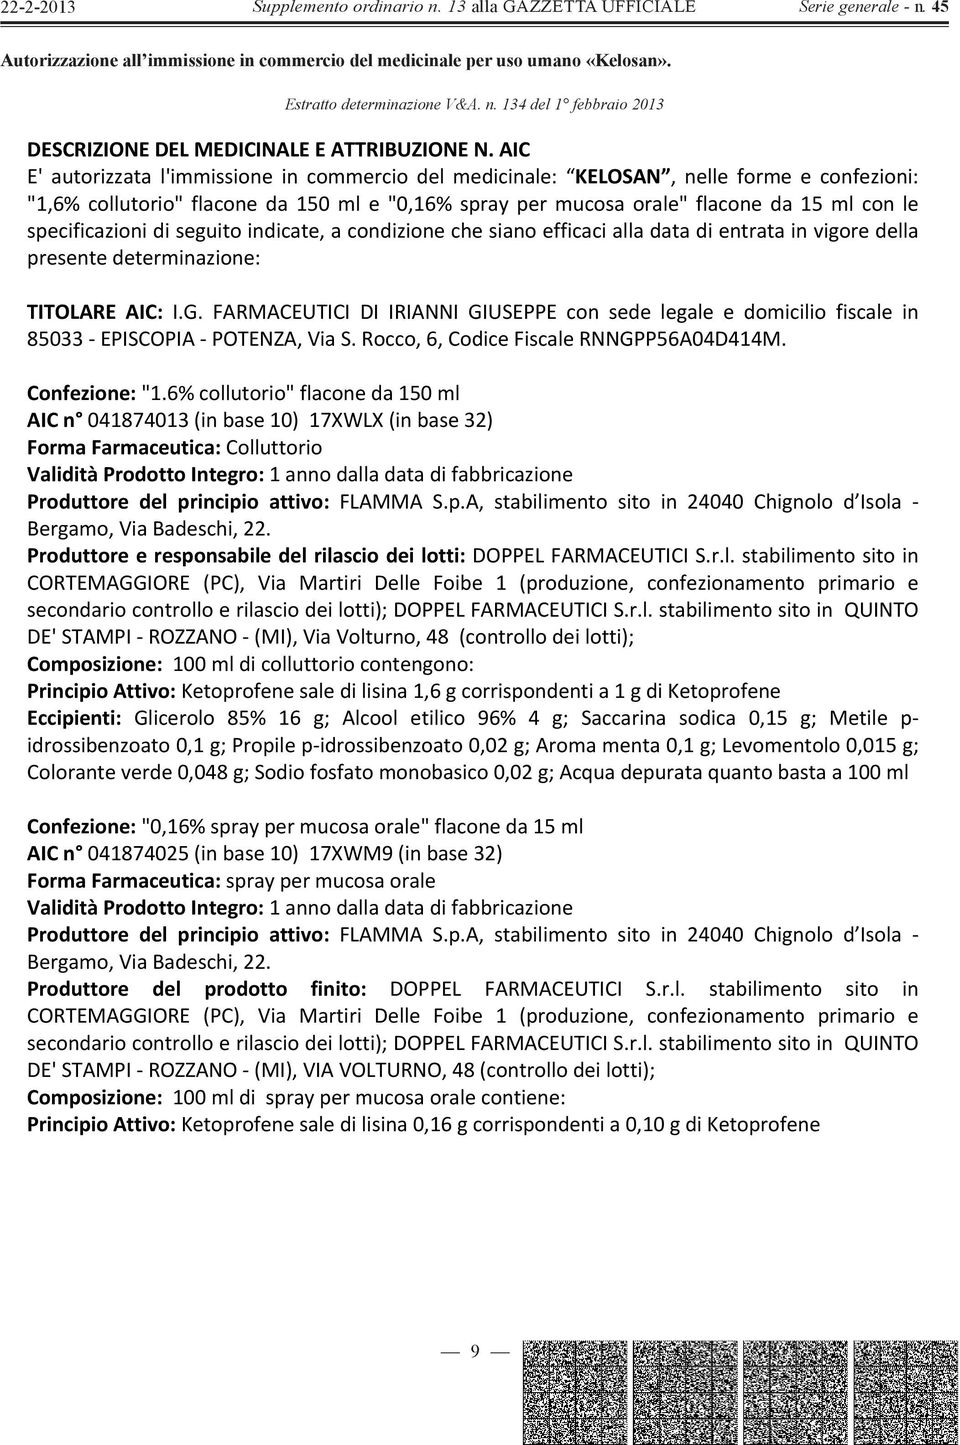 specificazionidiseguitoindicate,acondizionechesianoefficacialladatadientratainvigoredella presentedeterminazione: TITOLARE AIC: I.G.